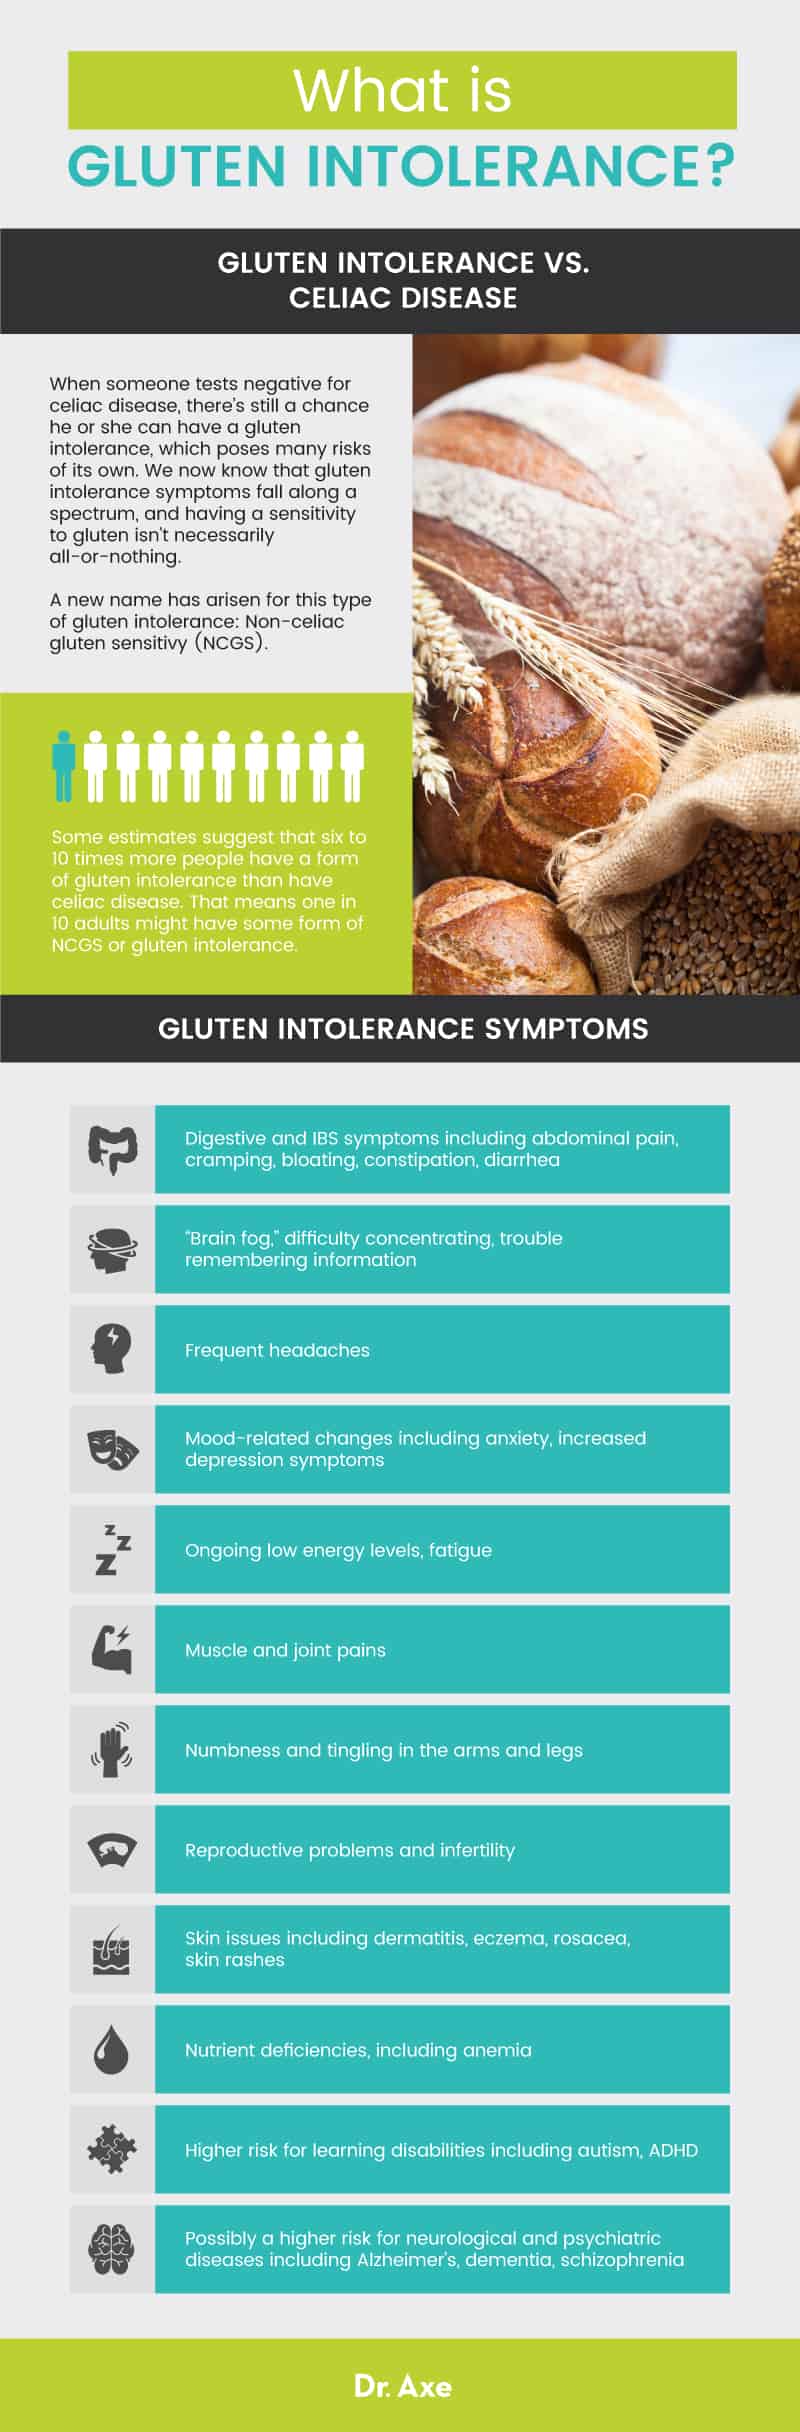 Gluten intolerance symptoms: What is gluten intolerance? - Dr. Axe